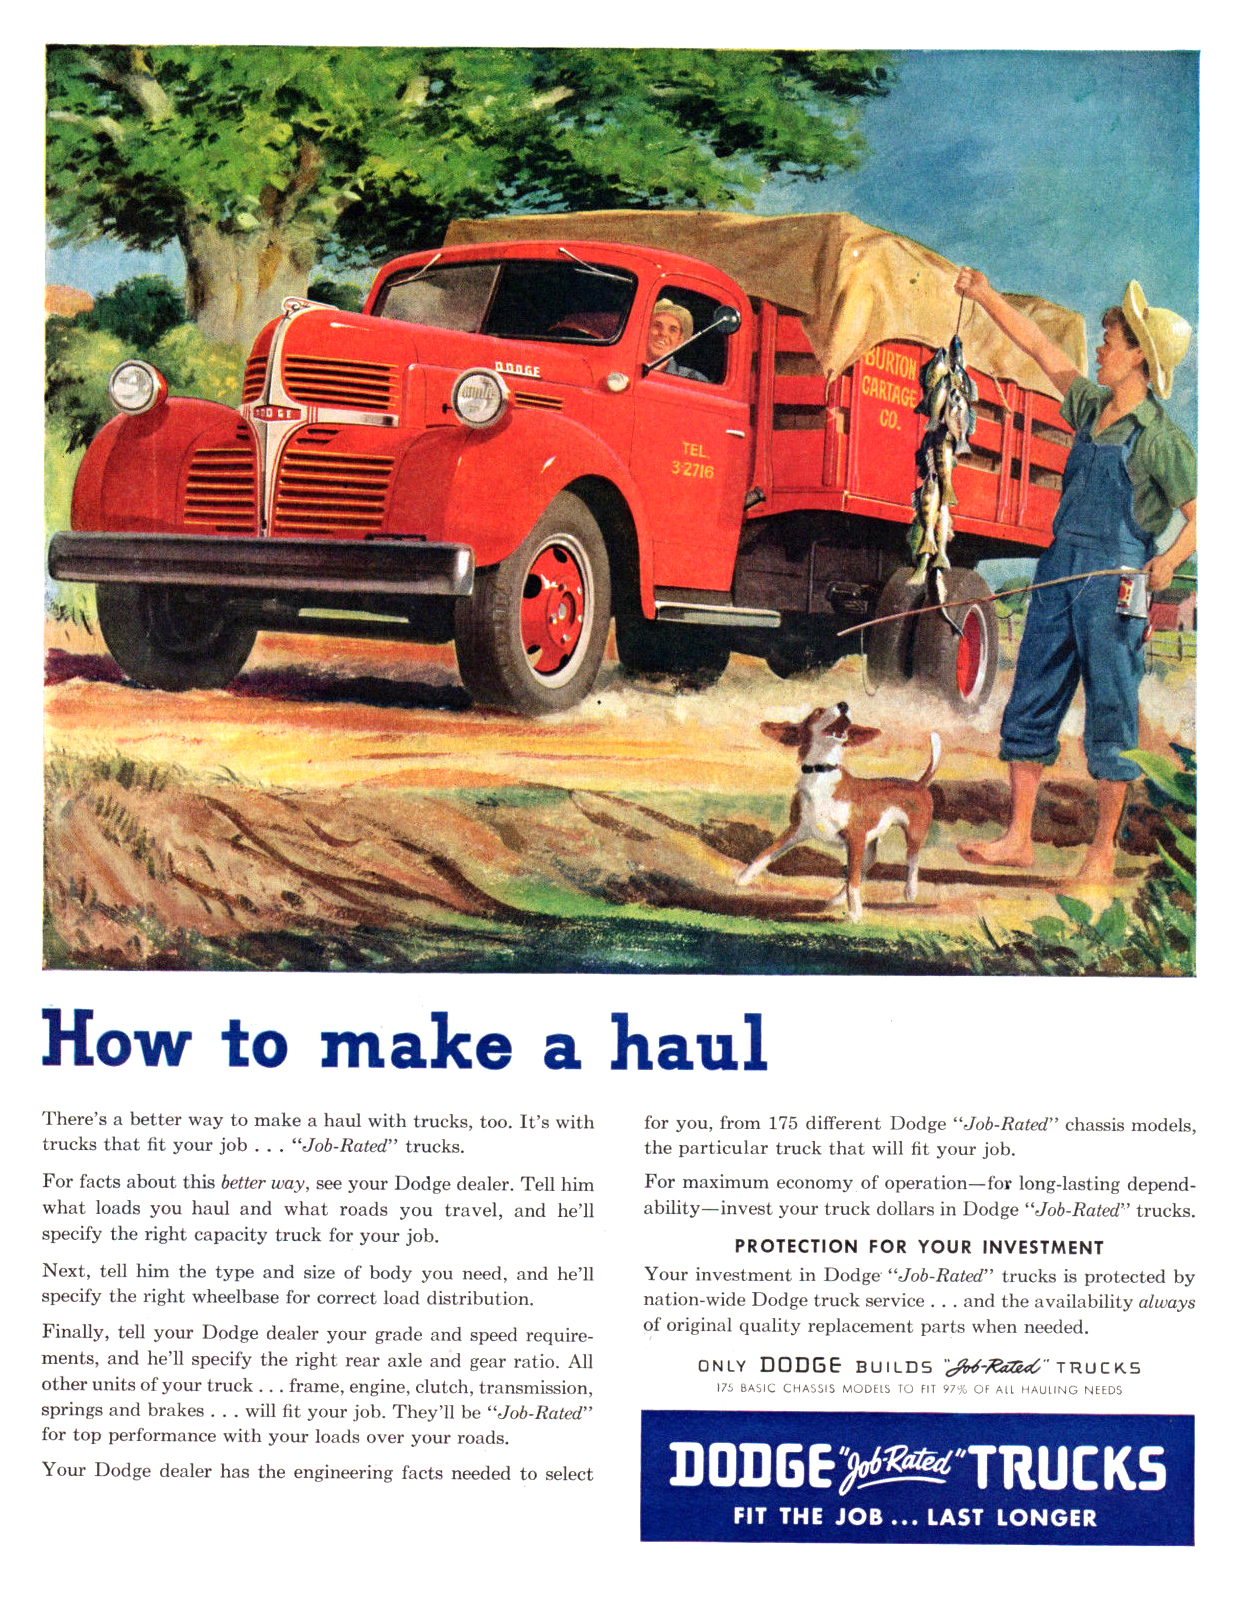 Dodge Trucks Ad (June, 1947): How to make a haul